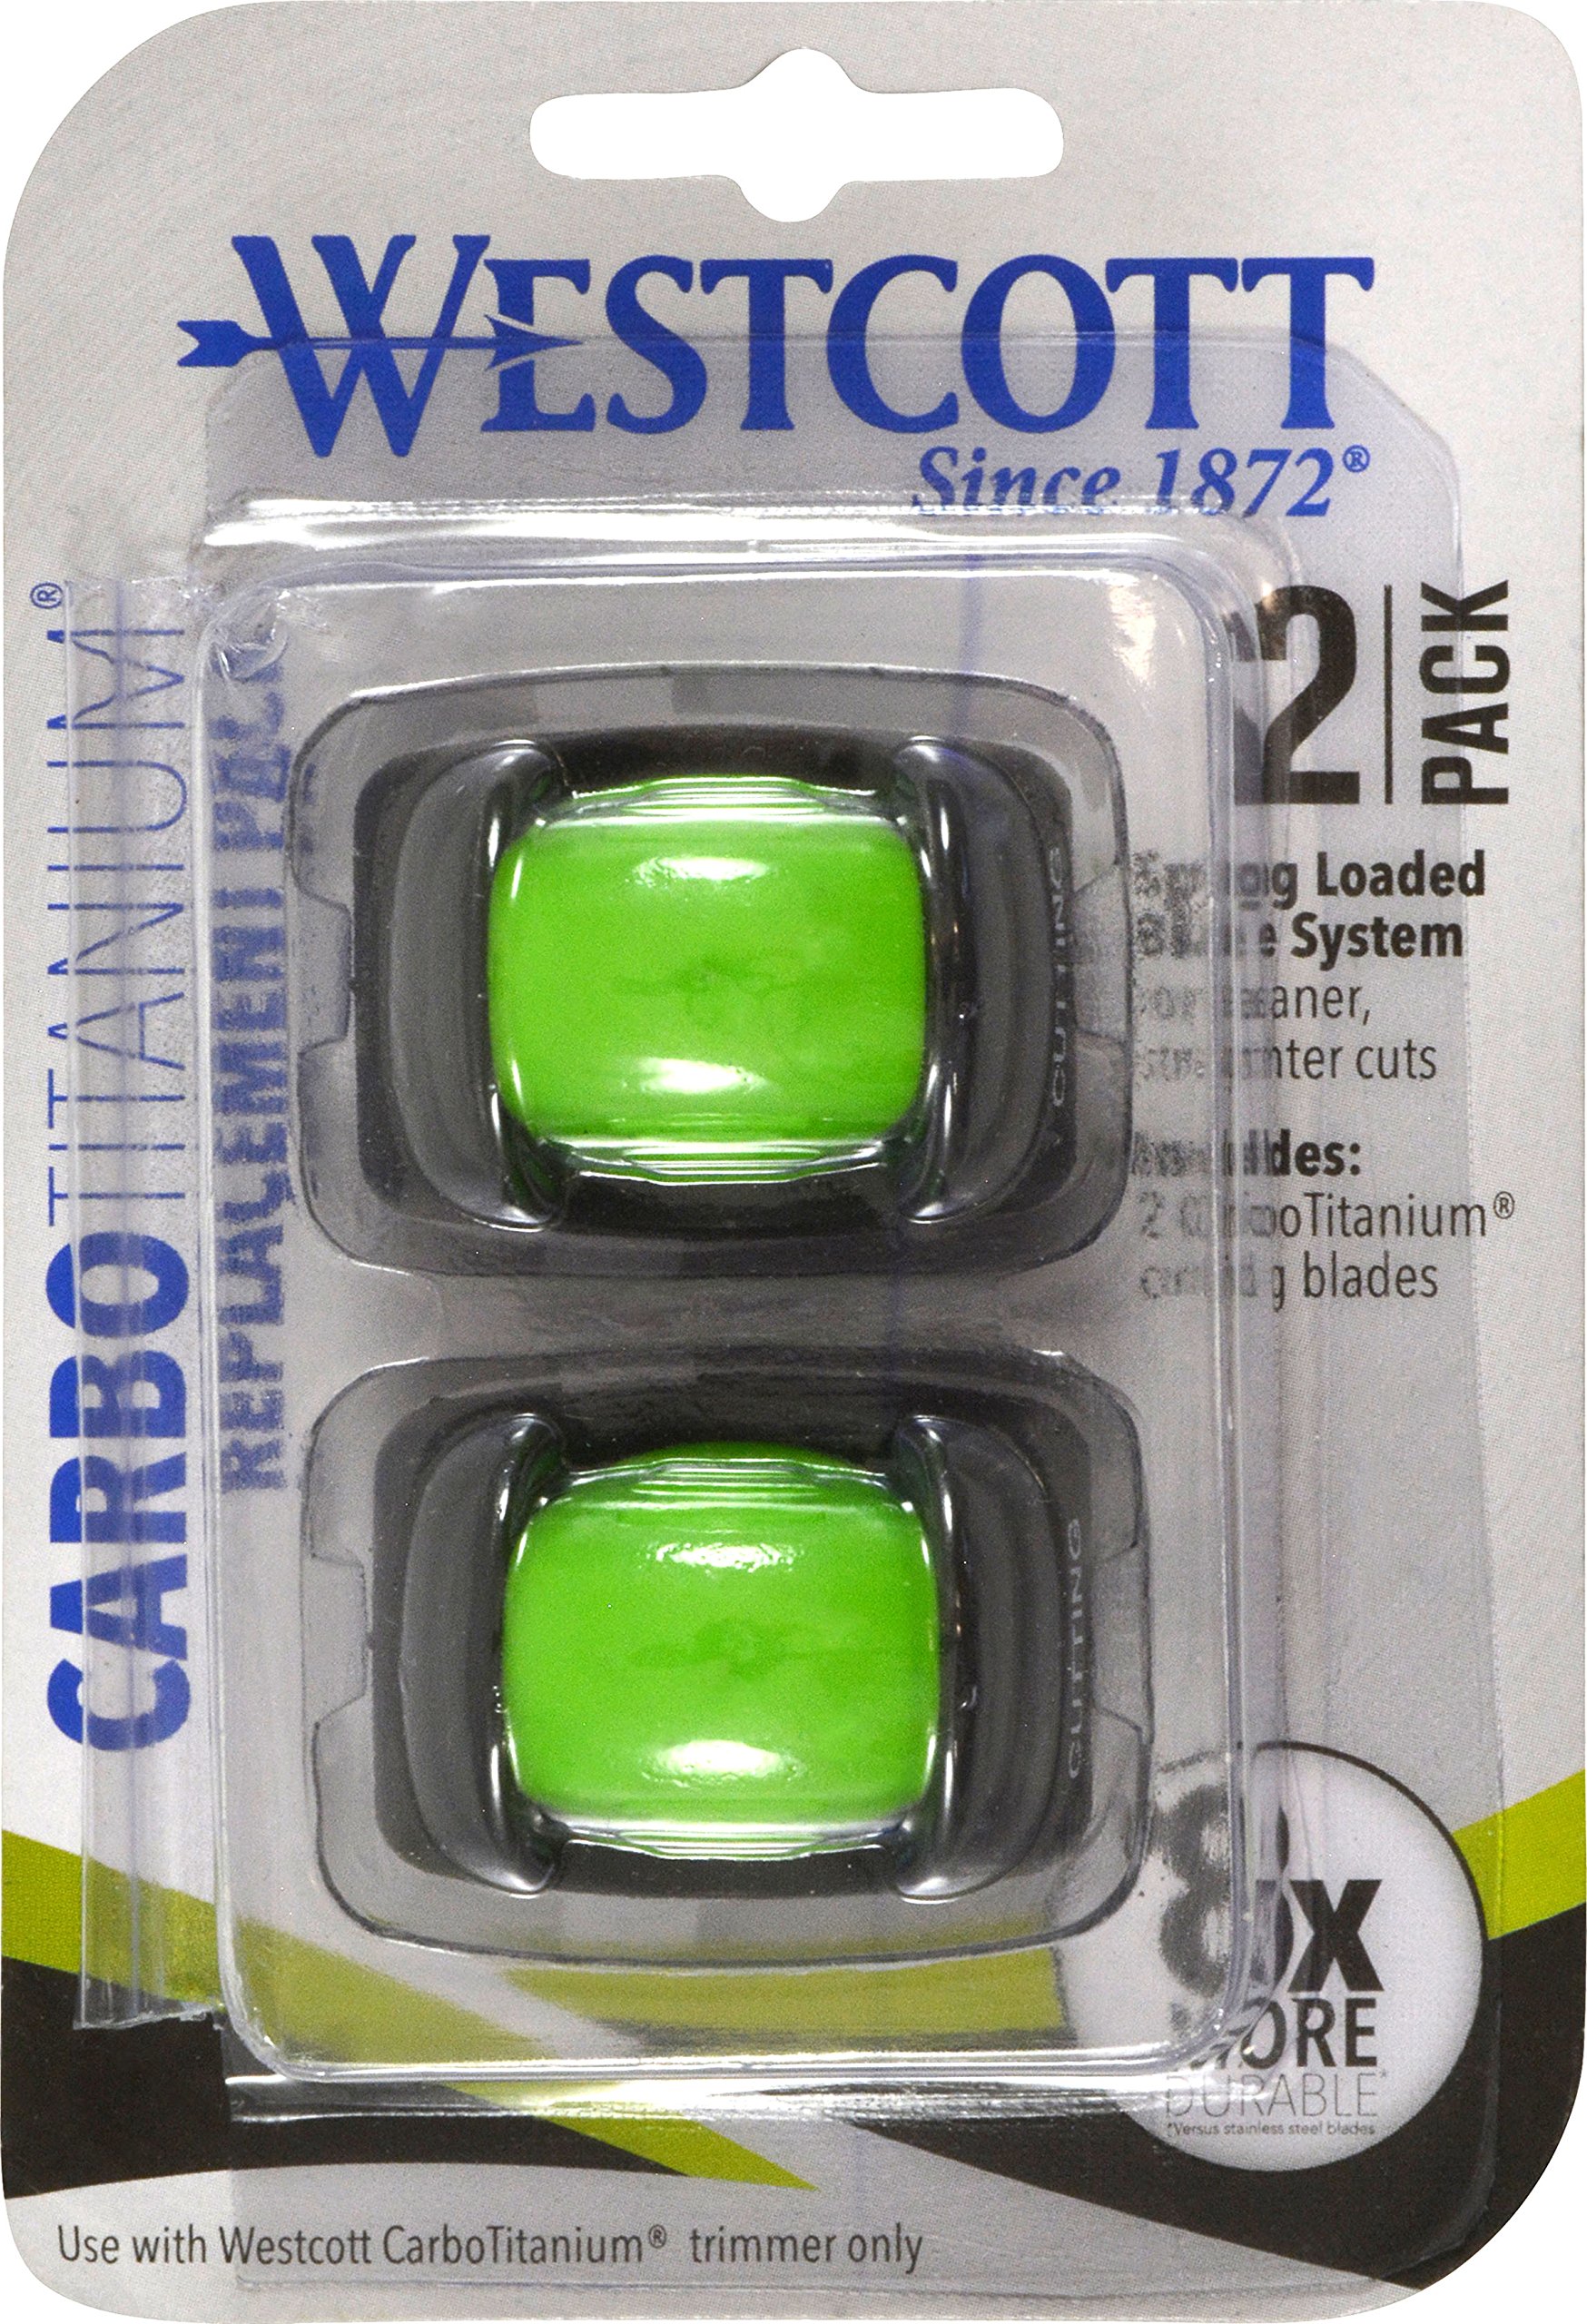 Westcott Dual-Sided Ceramic Box Opener, Uses Slice Ceramic Blades